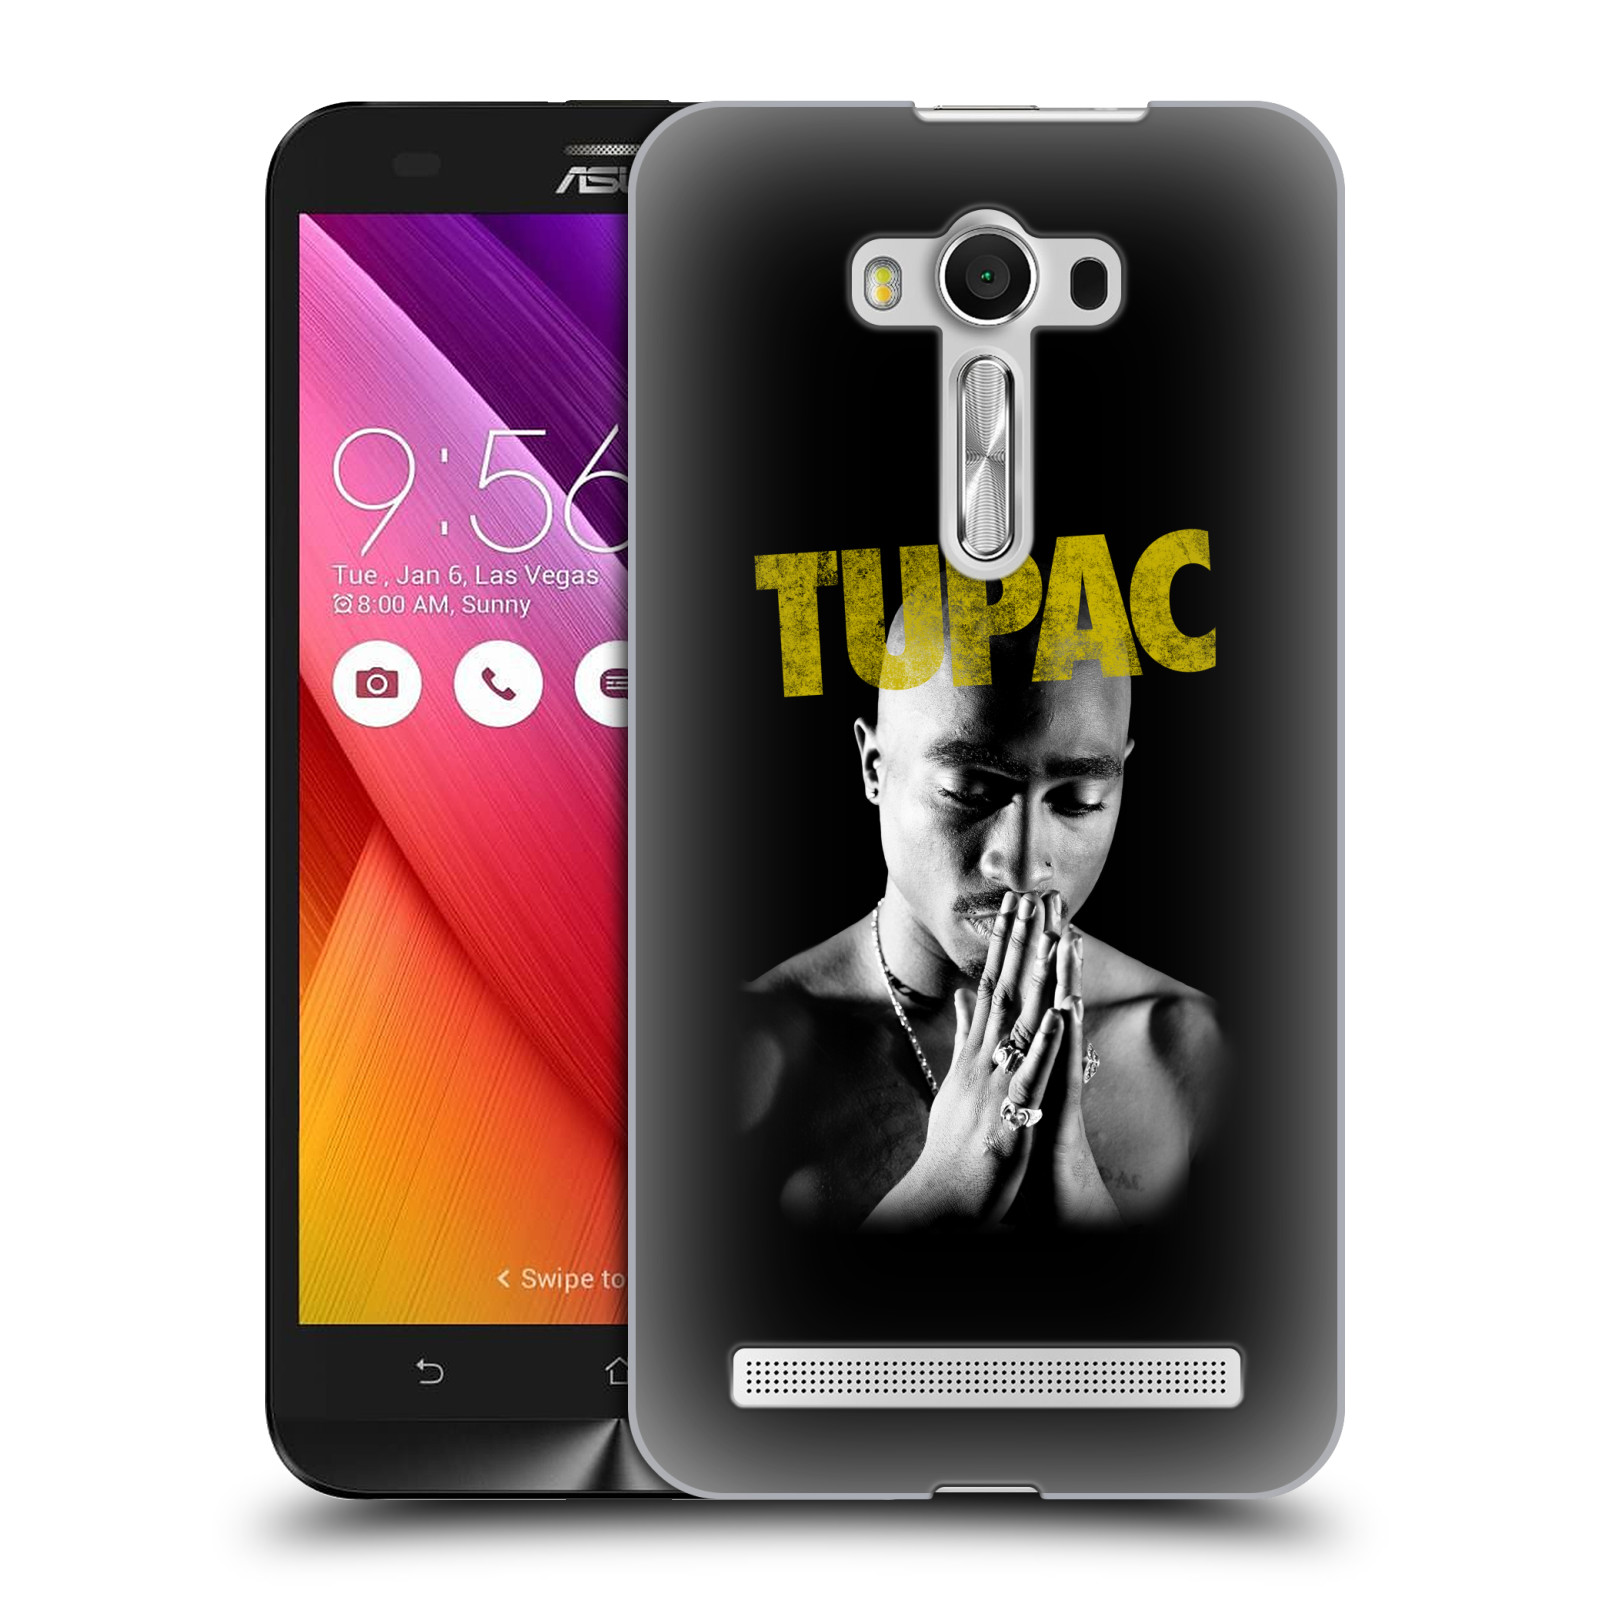 HEAD CASE plastový obal na mobil Asus Zenfone 2 LASER (5,5 displej ZE550KL) Zpěvák rapper Tupac Shakur 2Pac zlatý nadpis